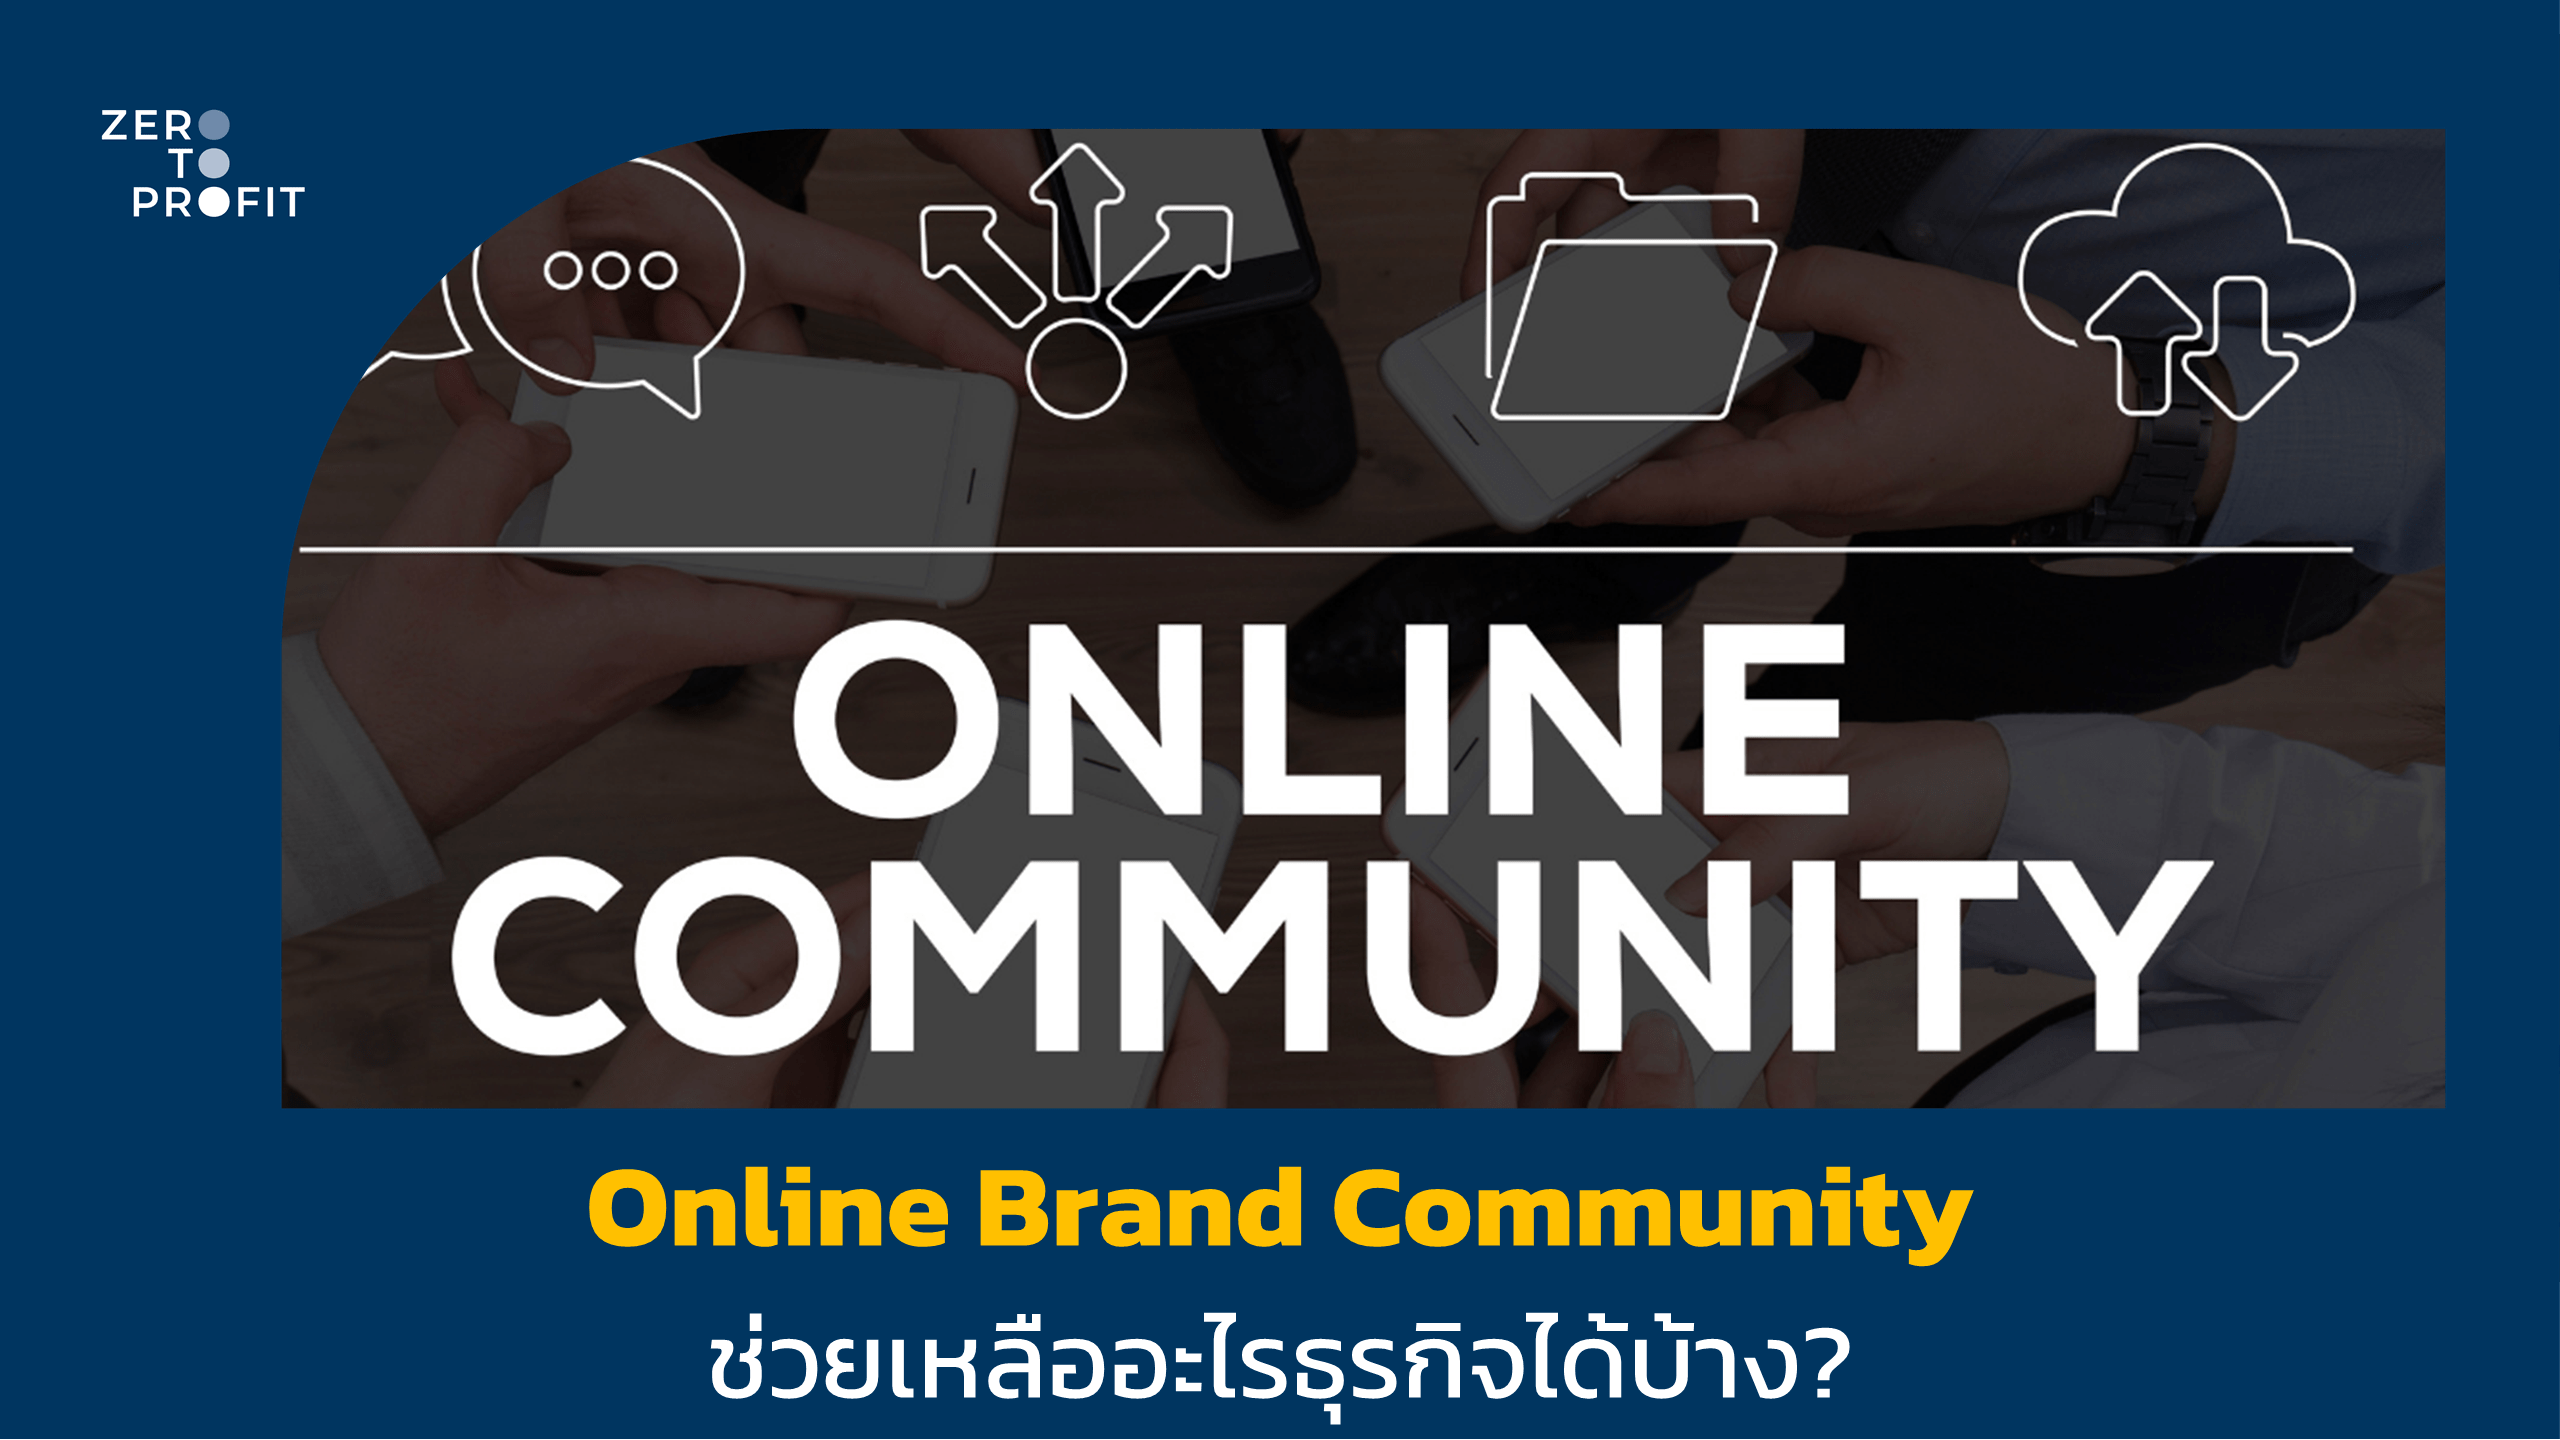 Online Brand Community ช่วยเหลืออะไรธุรกิจได้บ้าง?